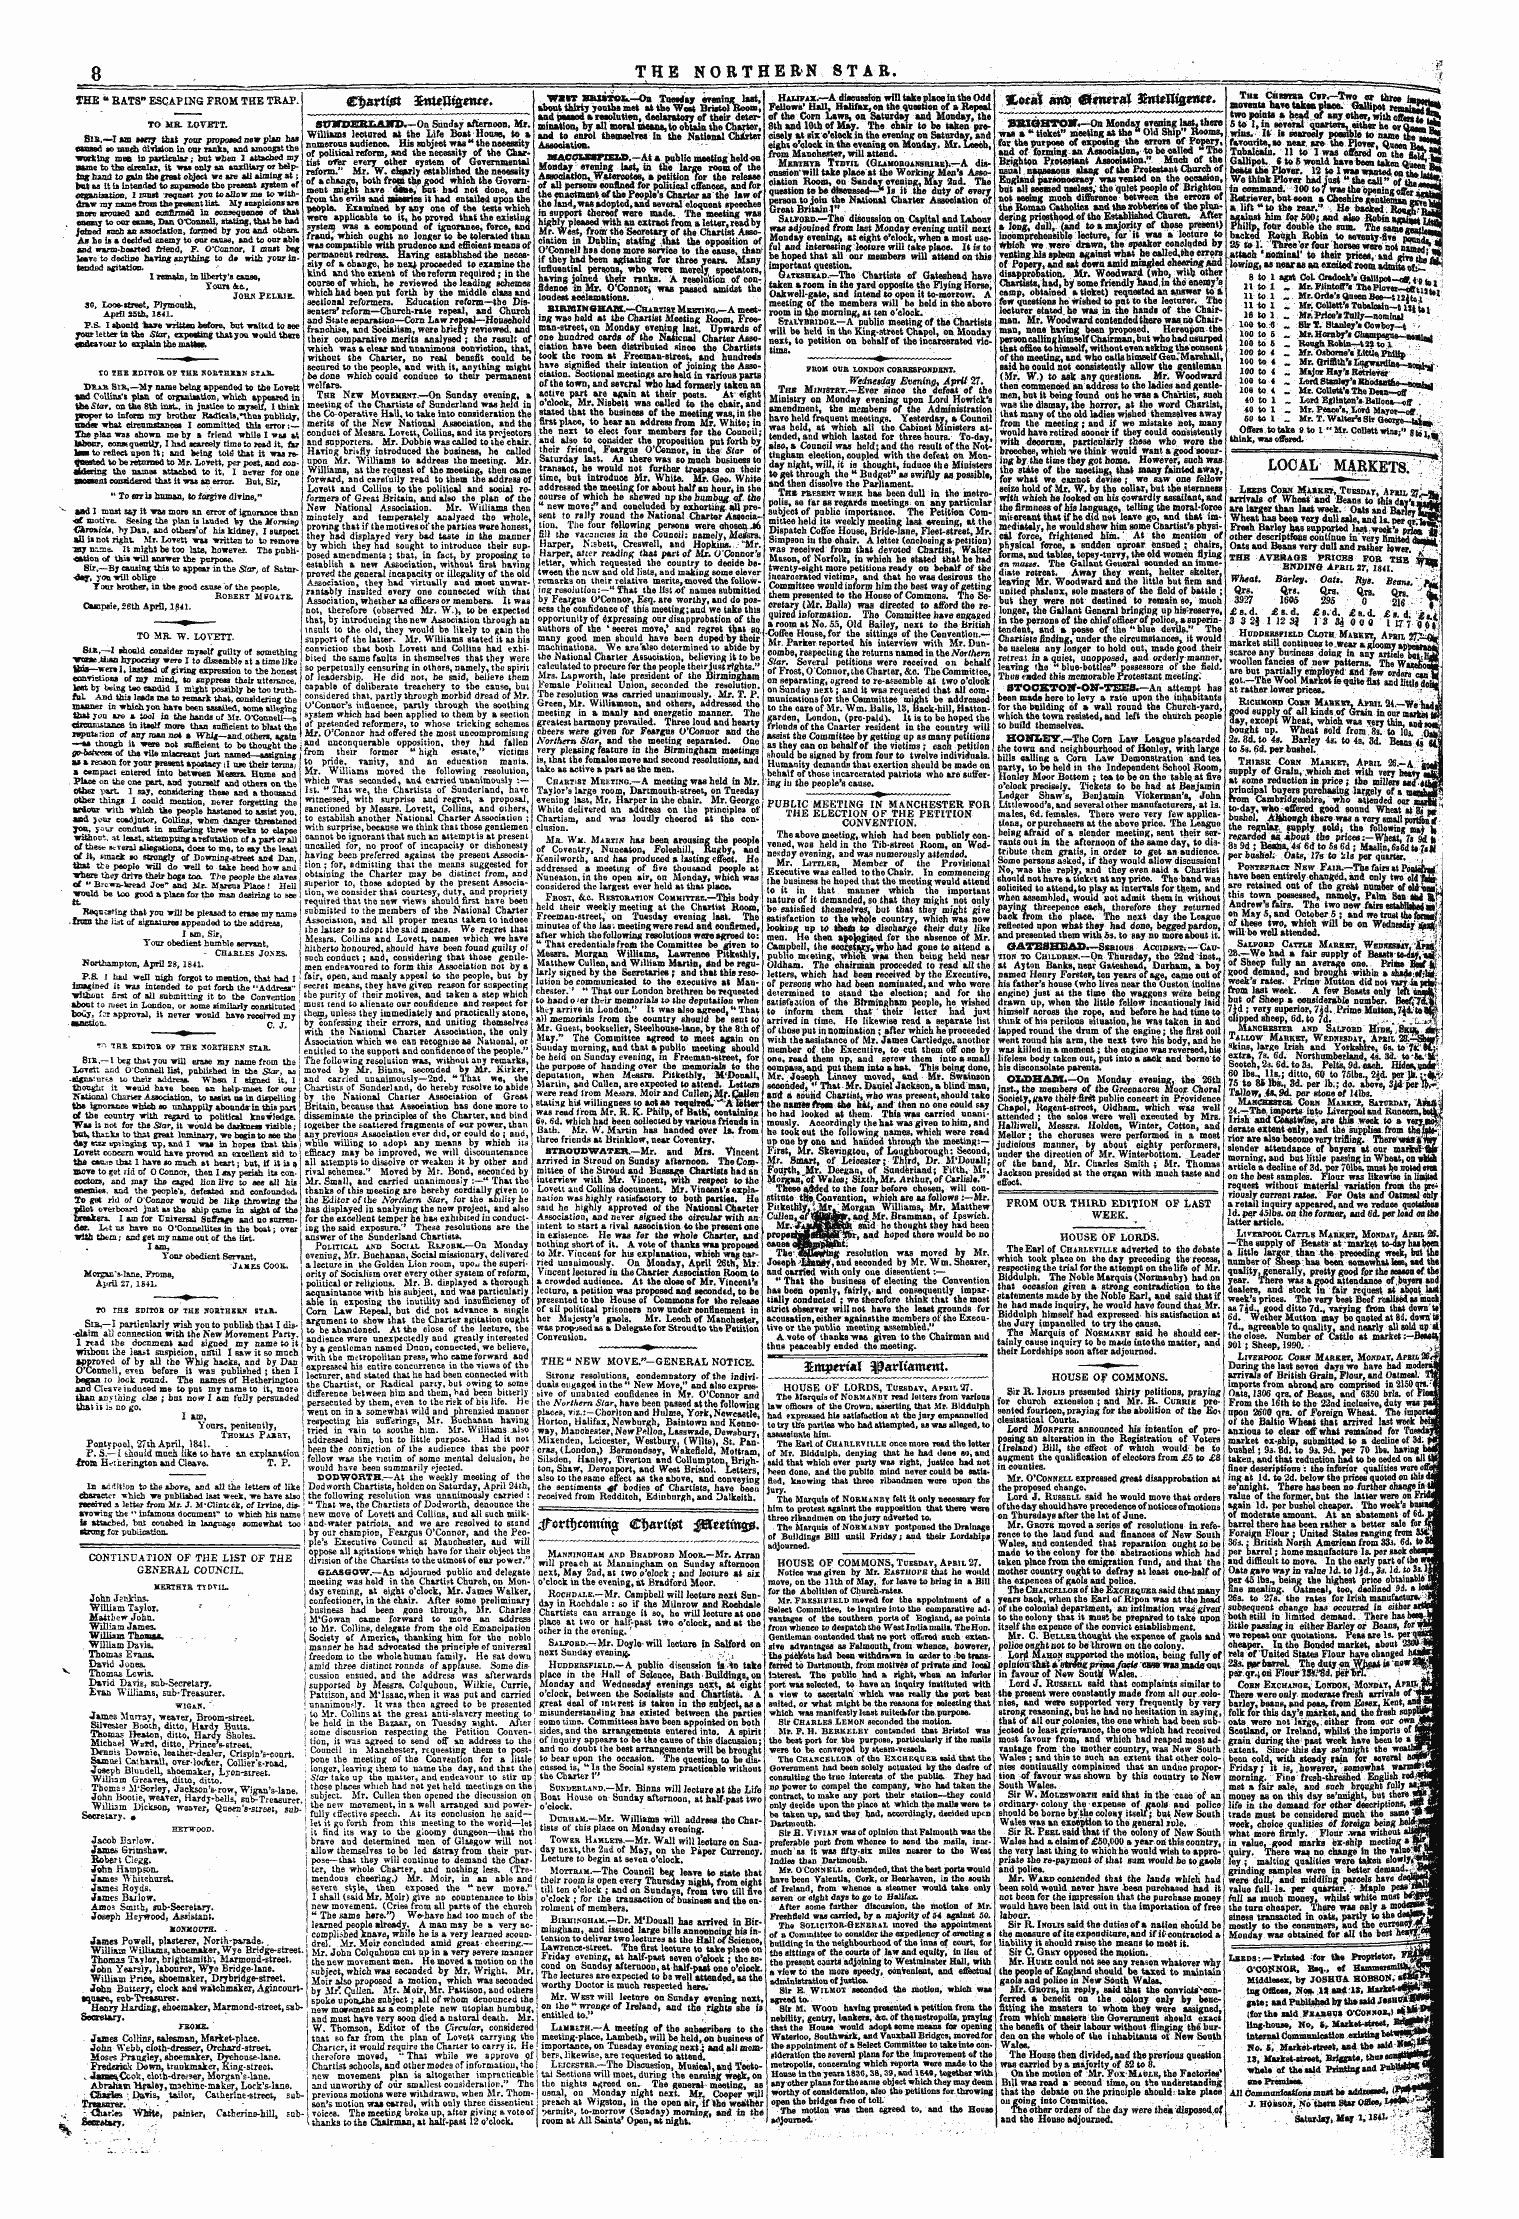 Northern Star (1837-1852): jS F Y, 1st edition - Log Al Markets. :